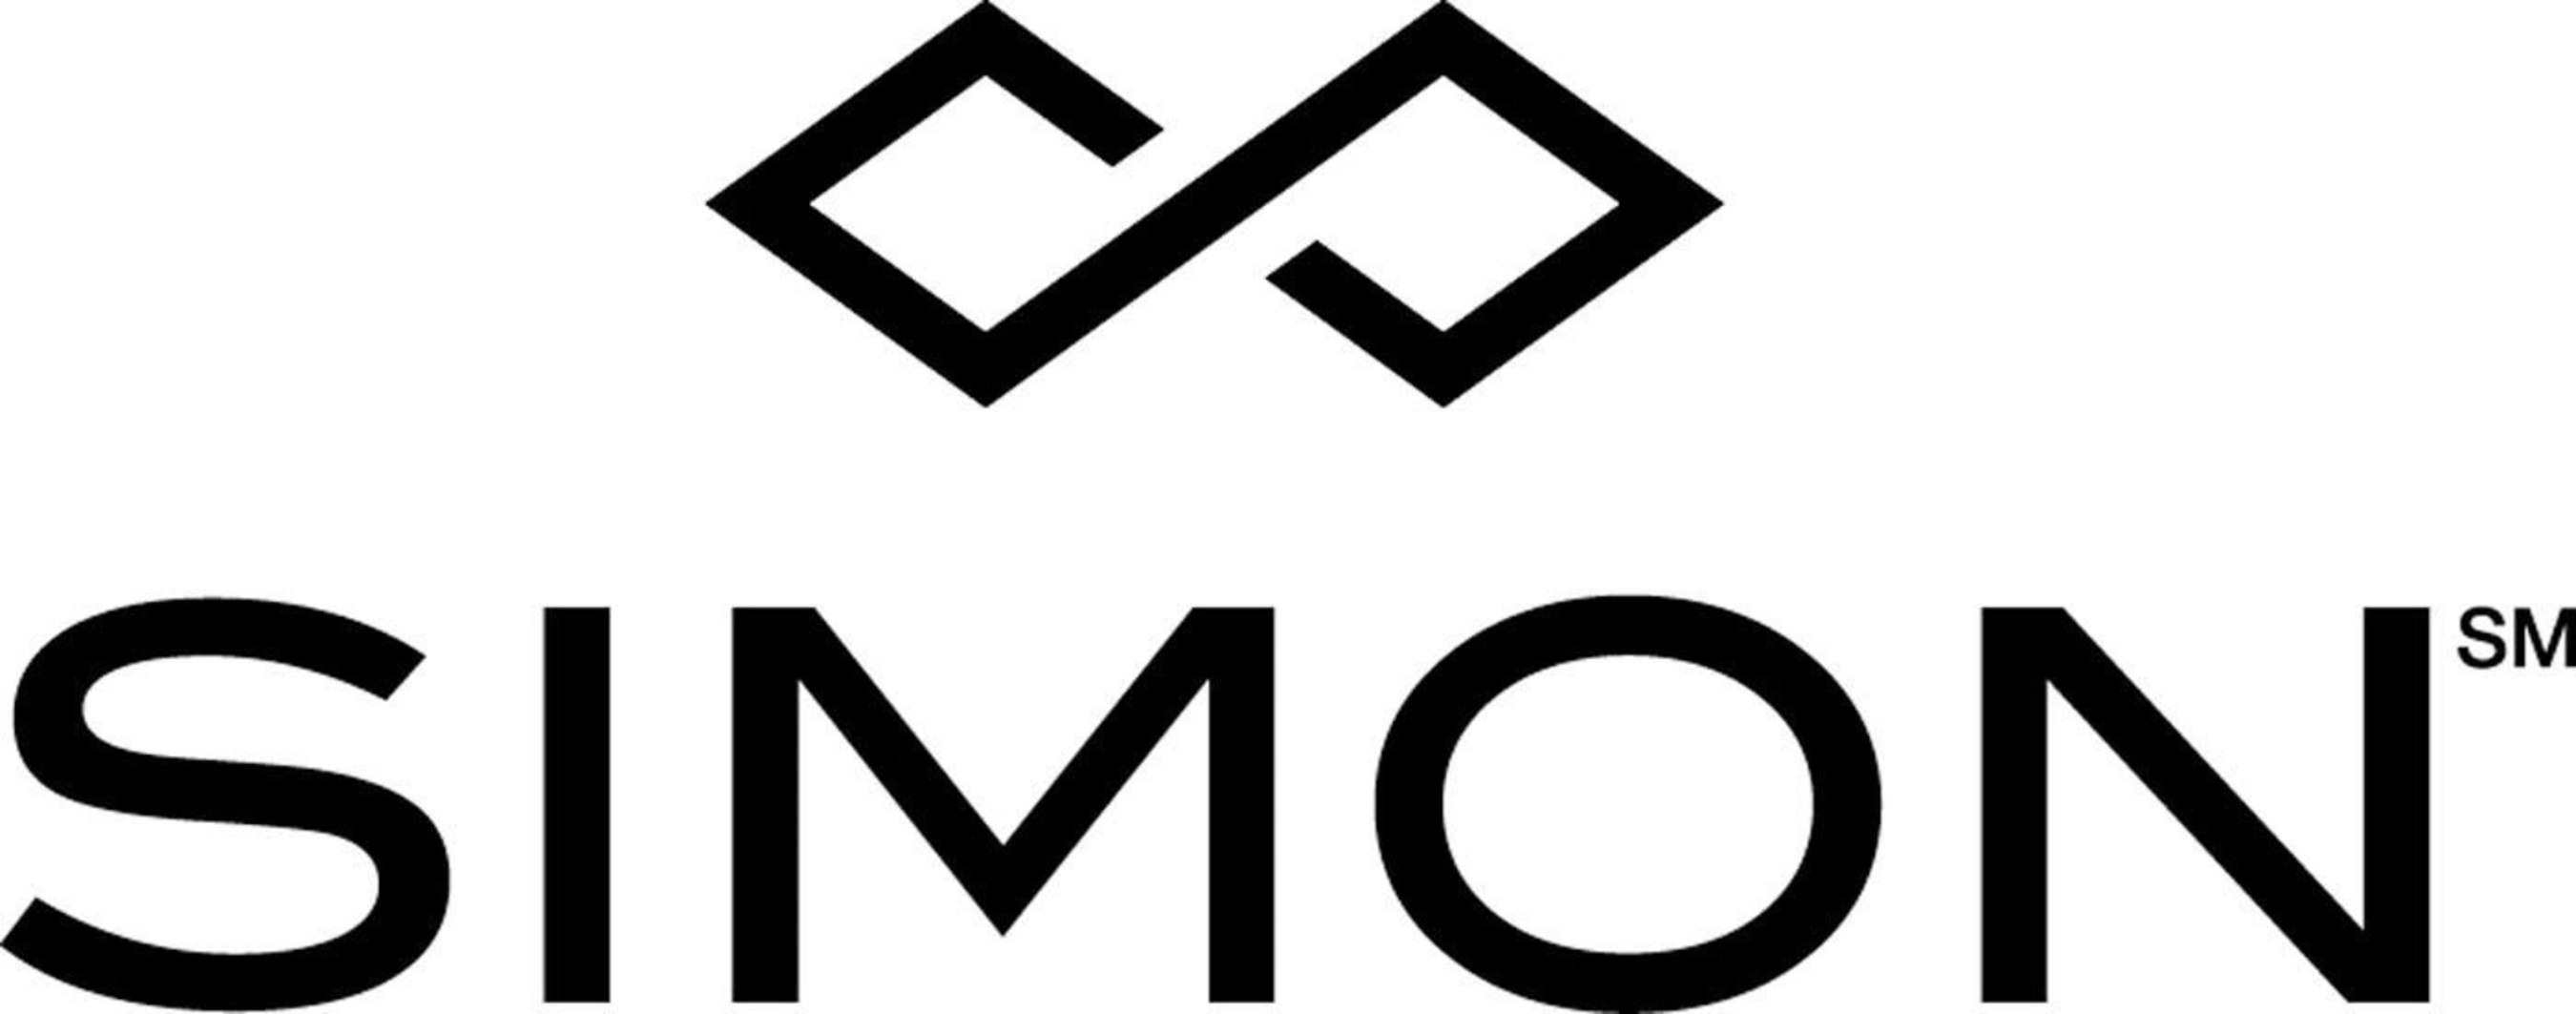 Simon Property Group Logo